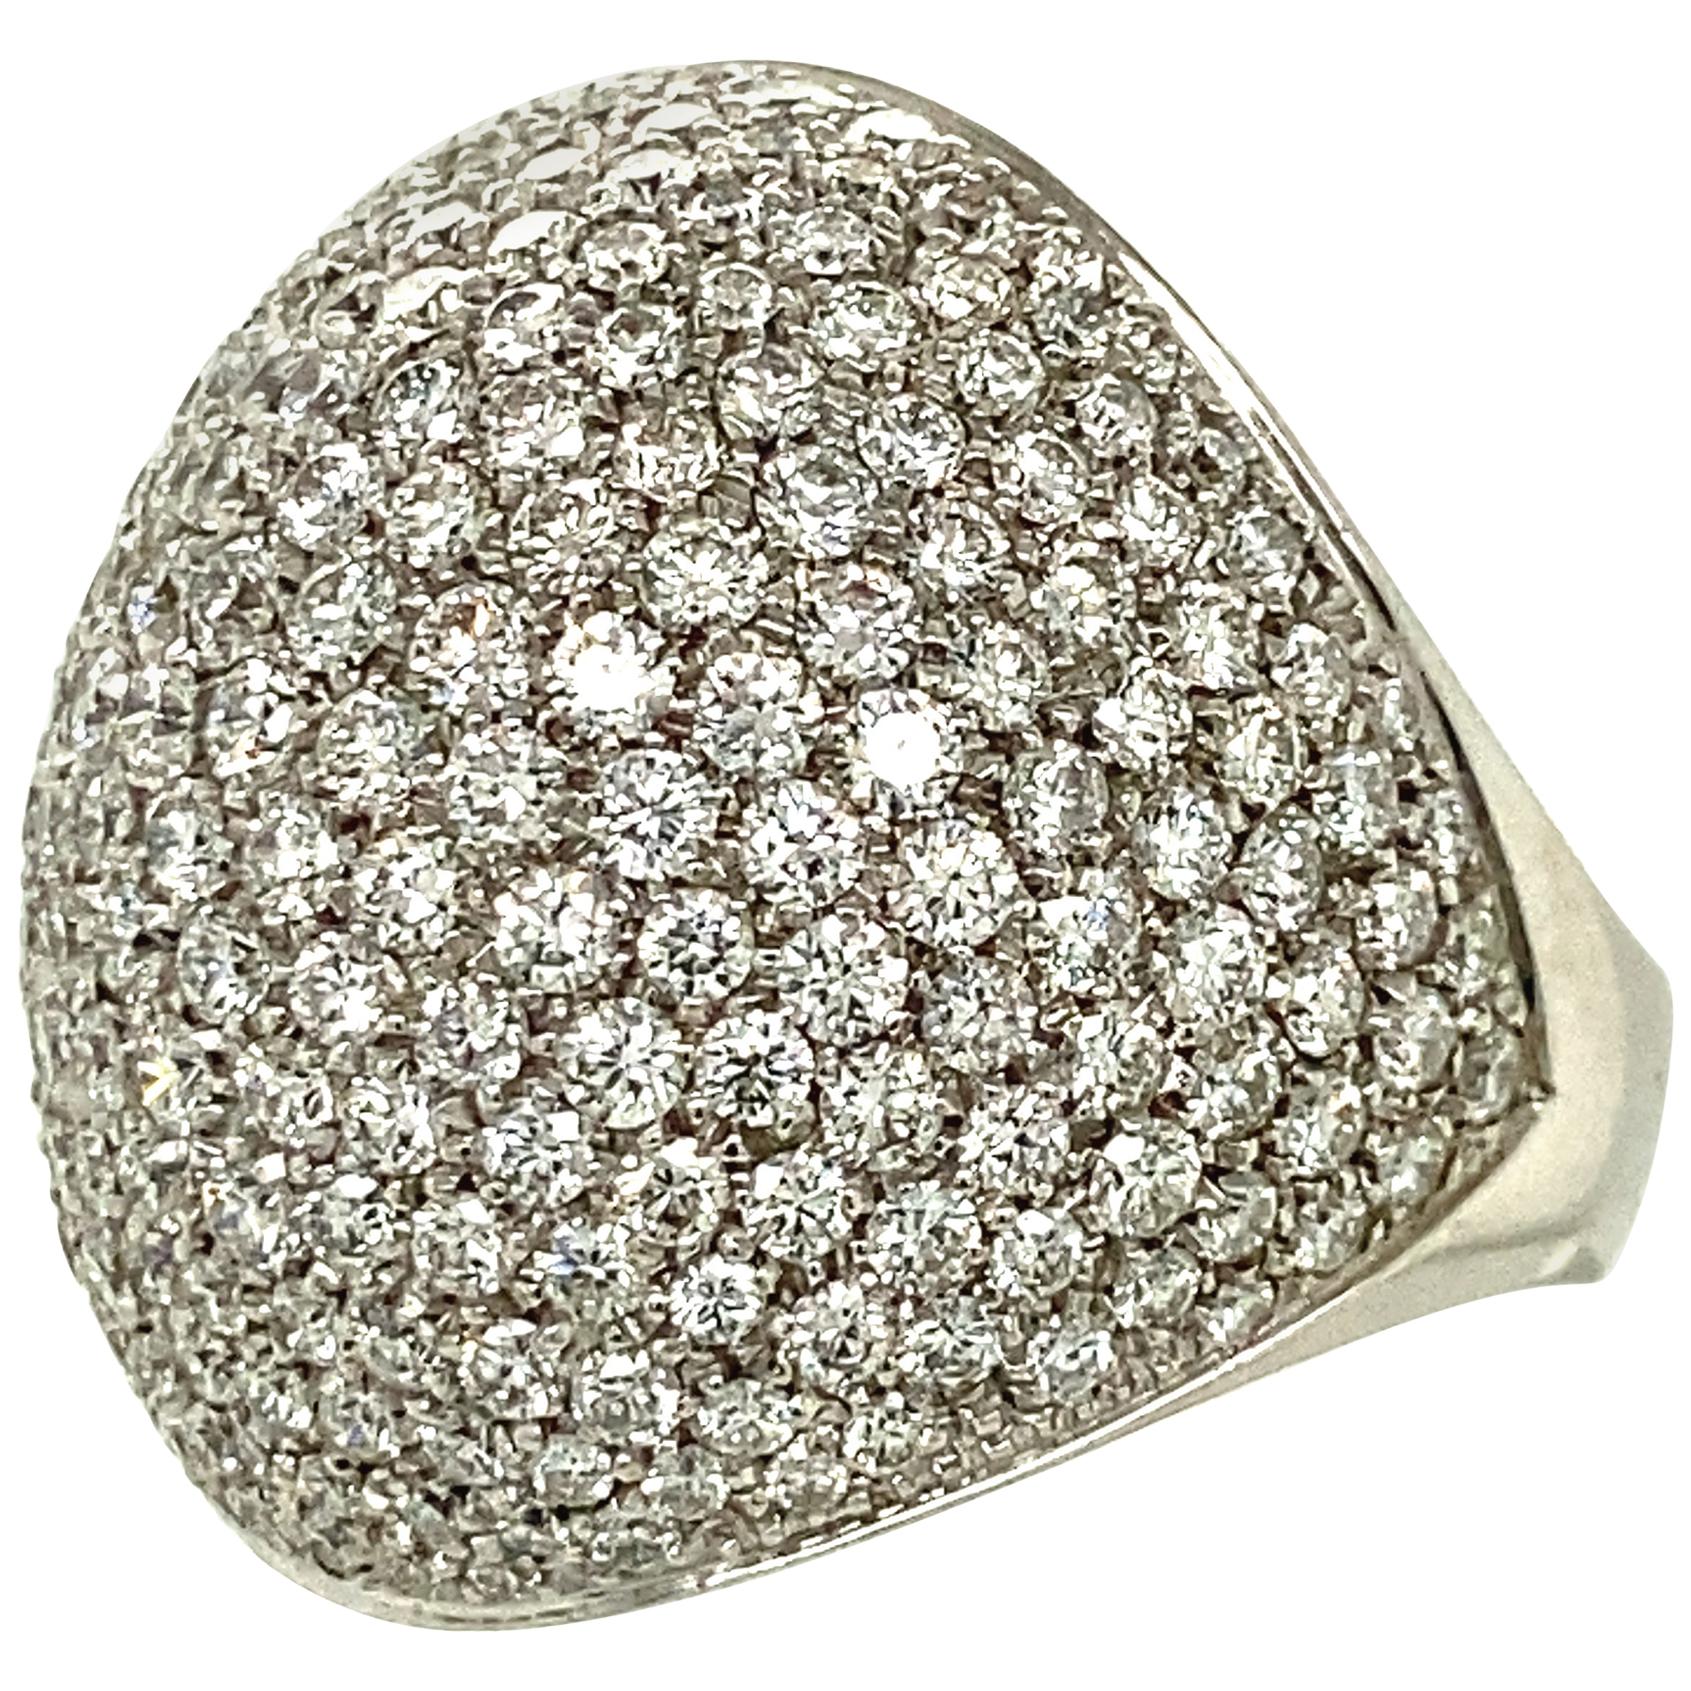 Krieger White Gold Dome Pavé Diamond Ring